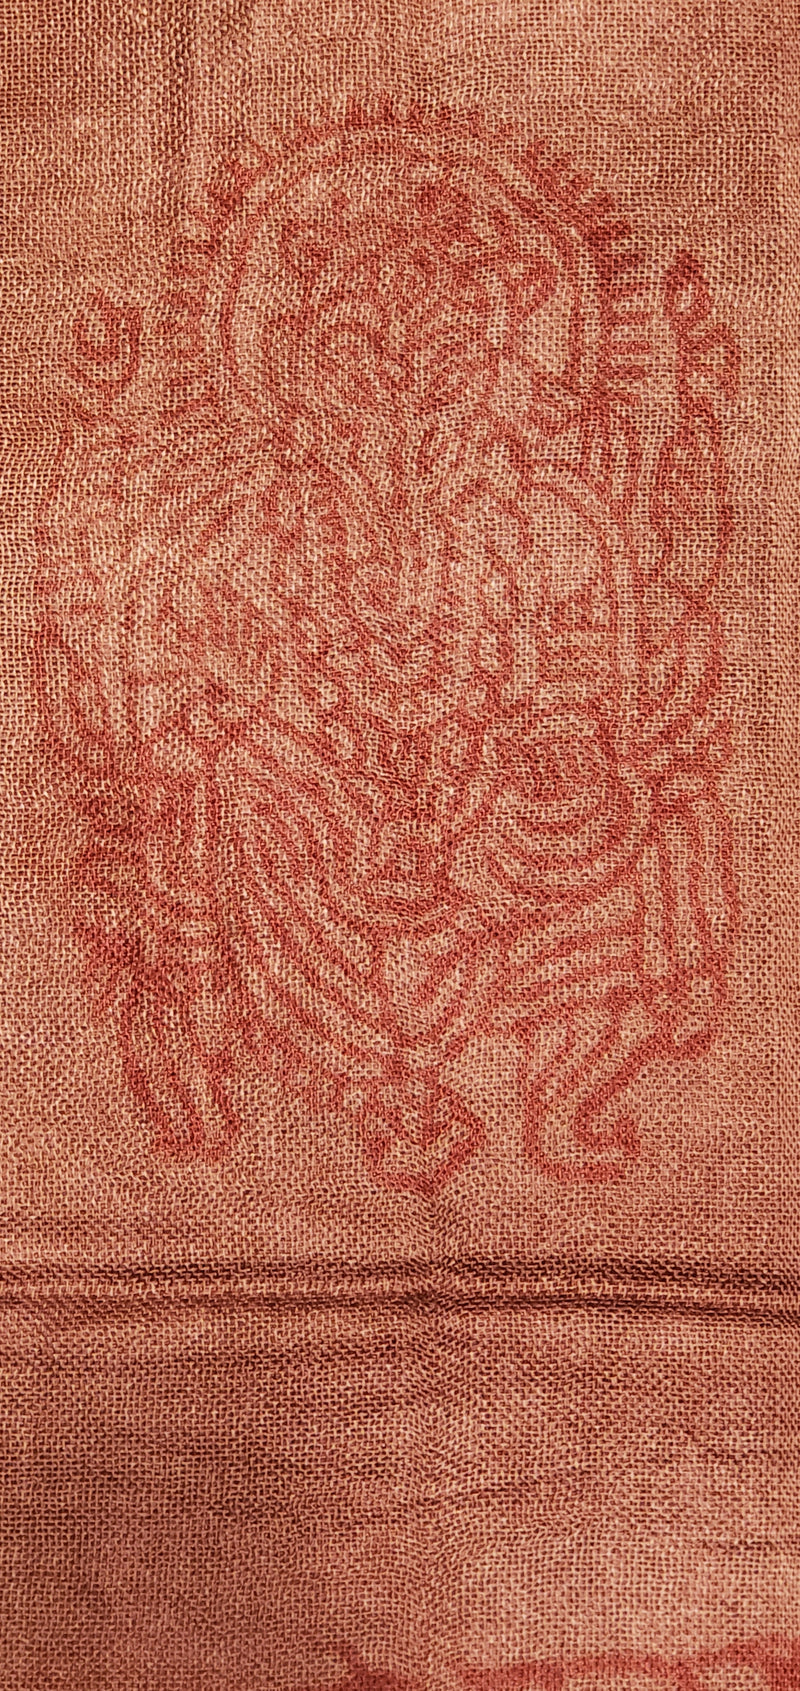 Red Primordial Om & Asian Symbols Printed Scarf